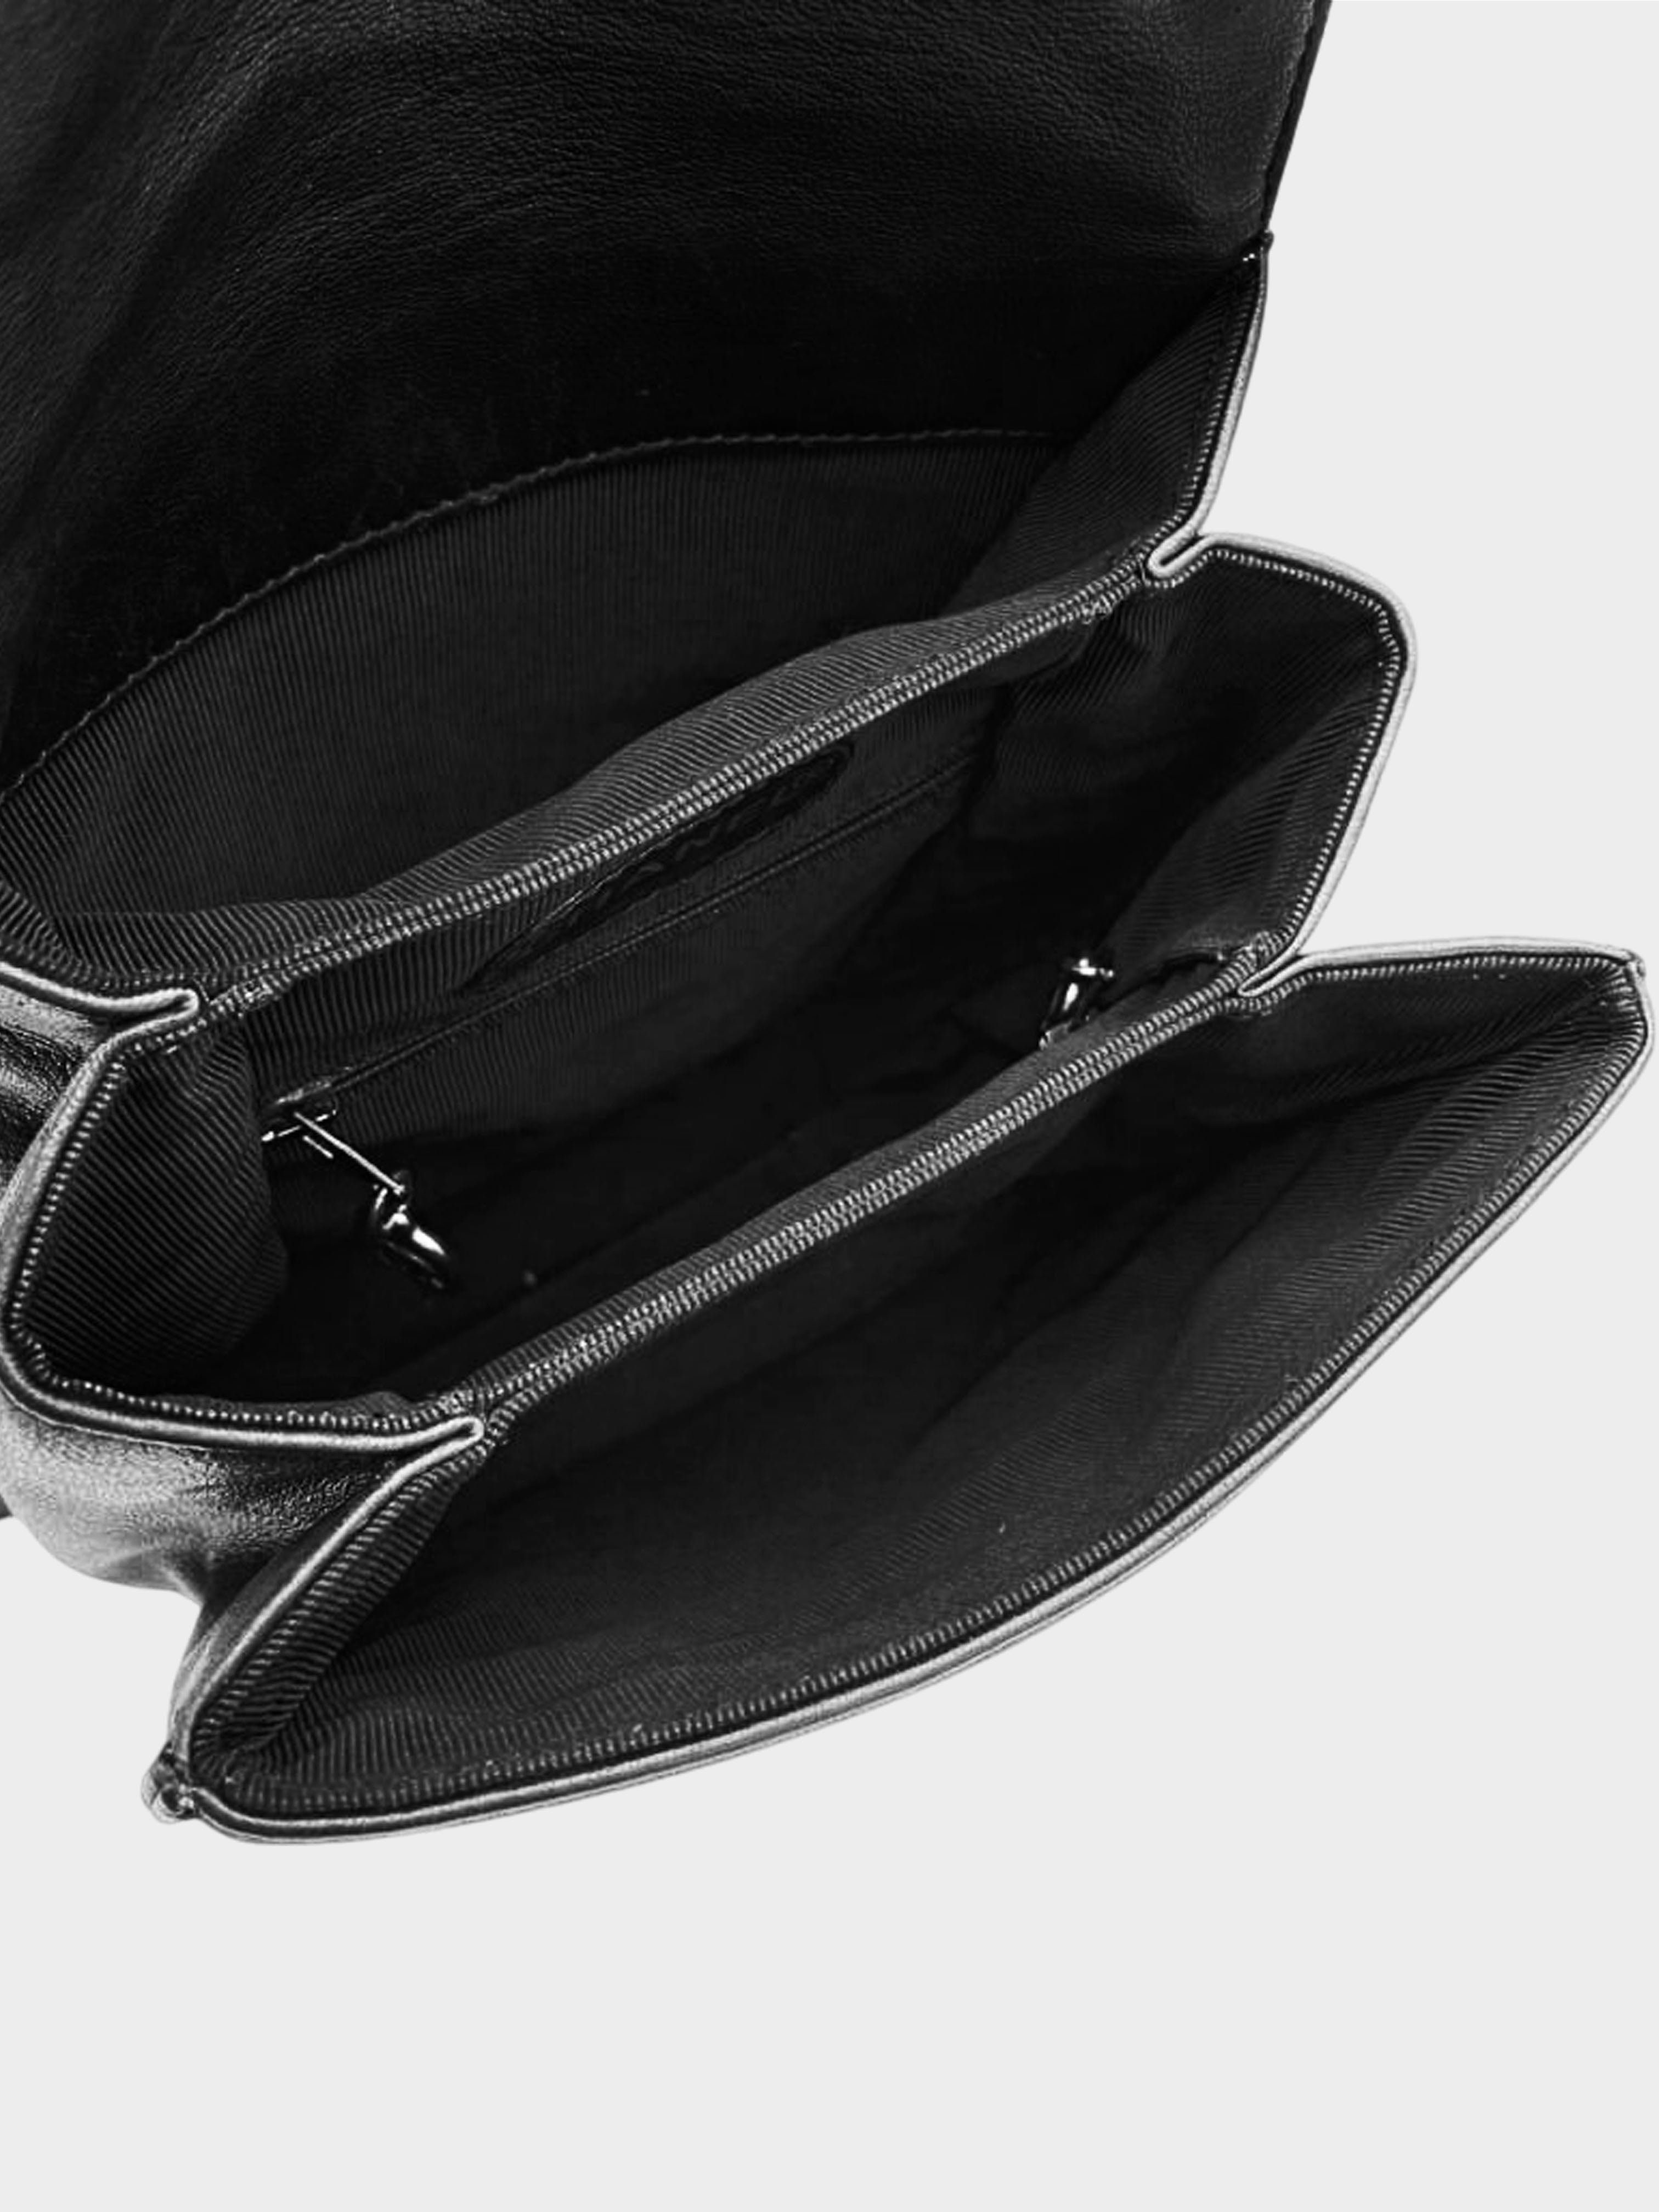 Chanel 1997 Black Lambskin Leather Backpack